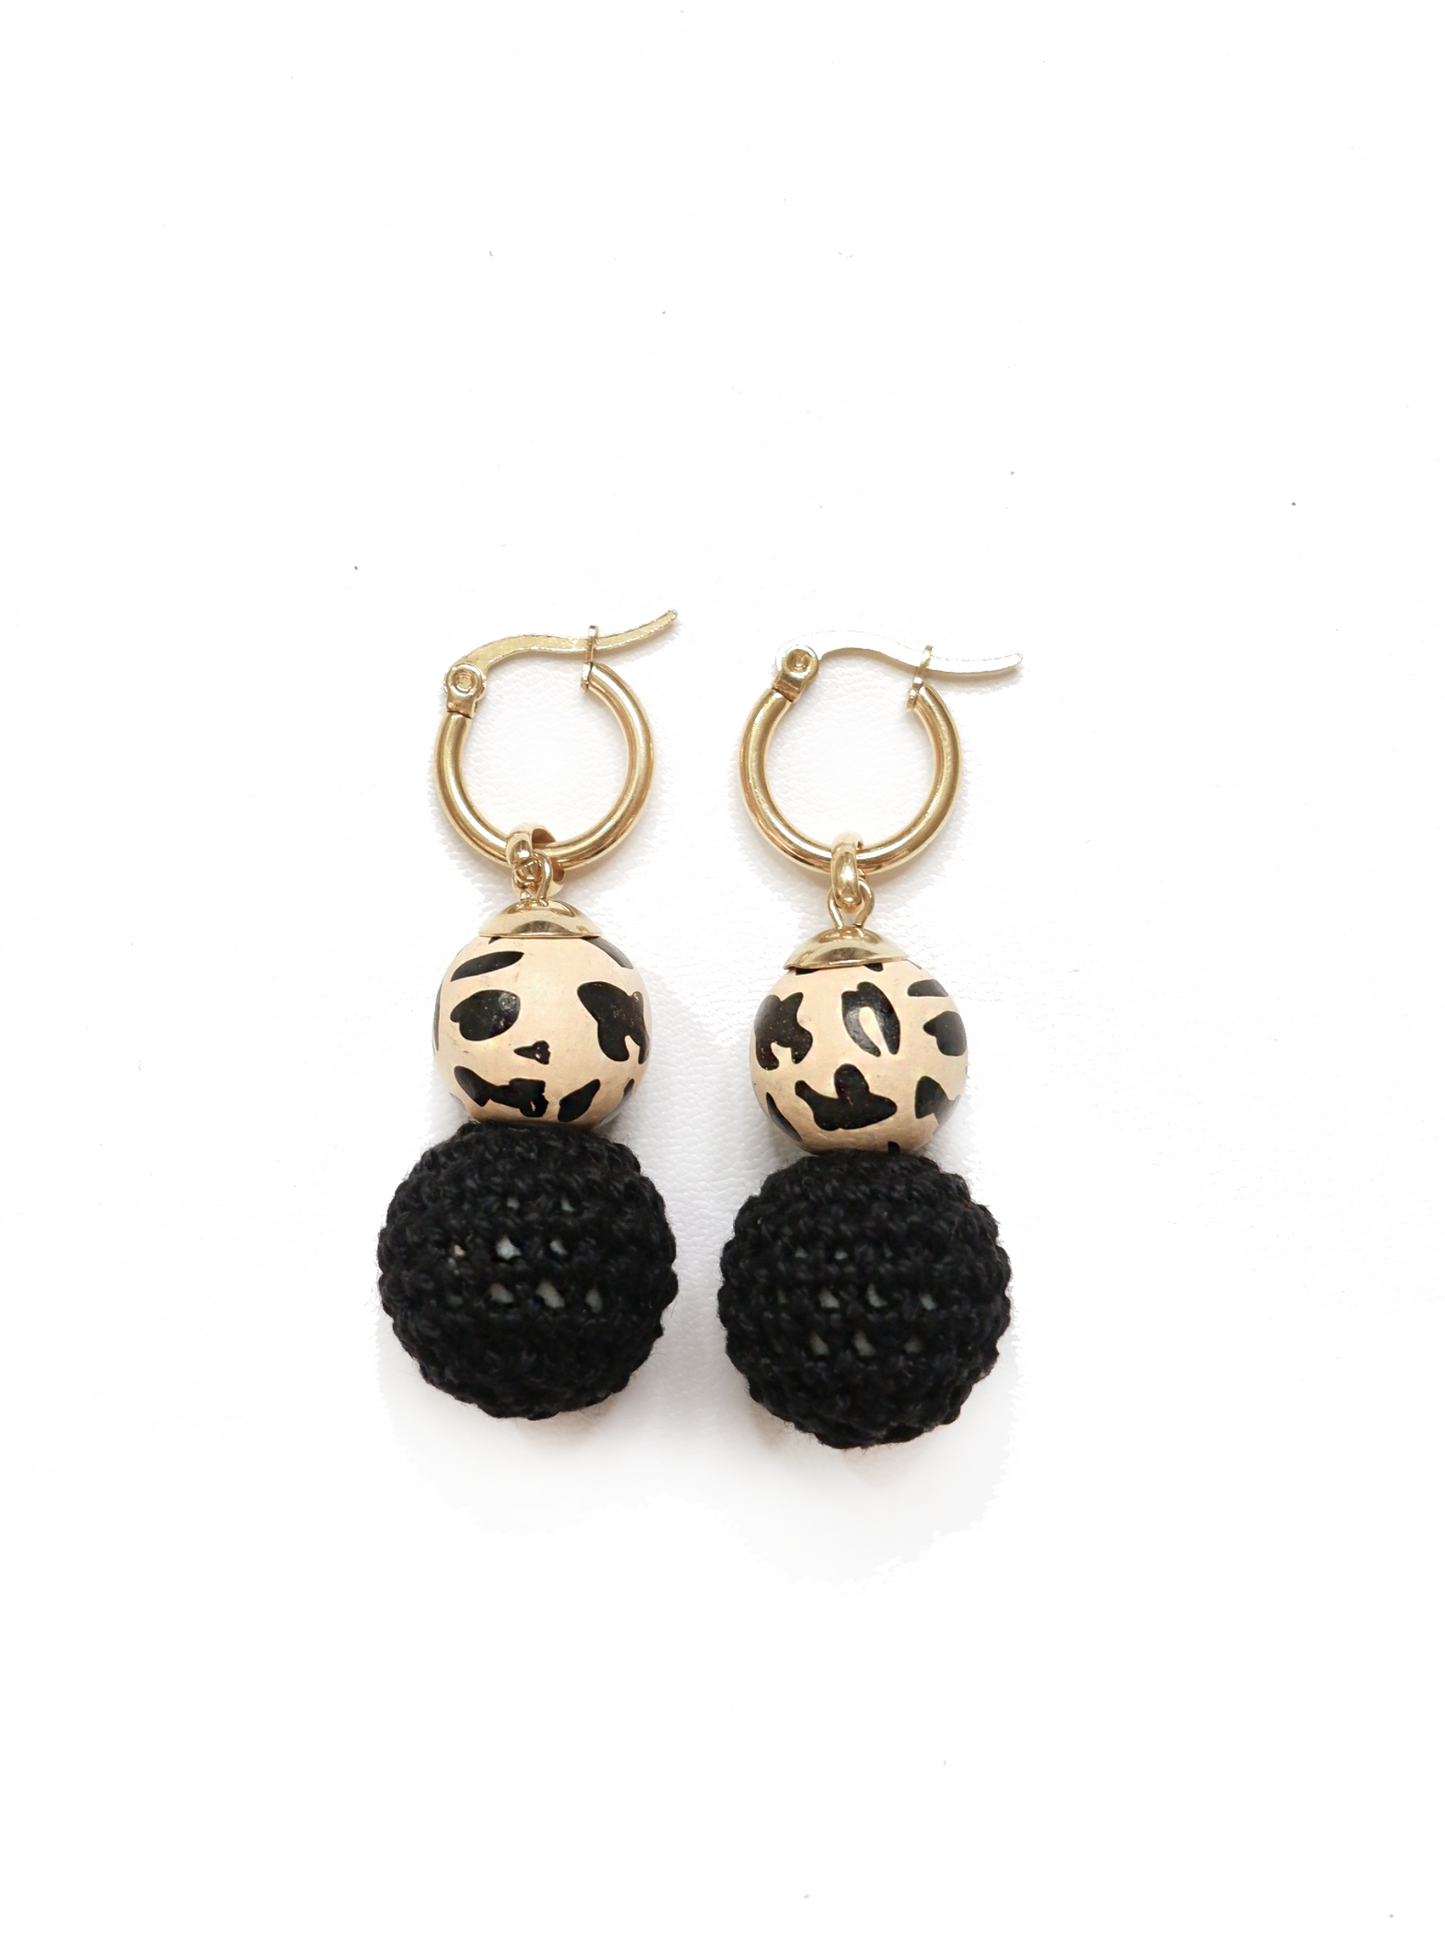 Zuri dangling earrings- black